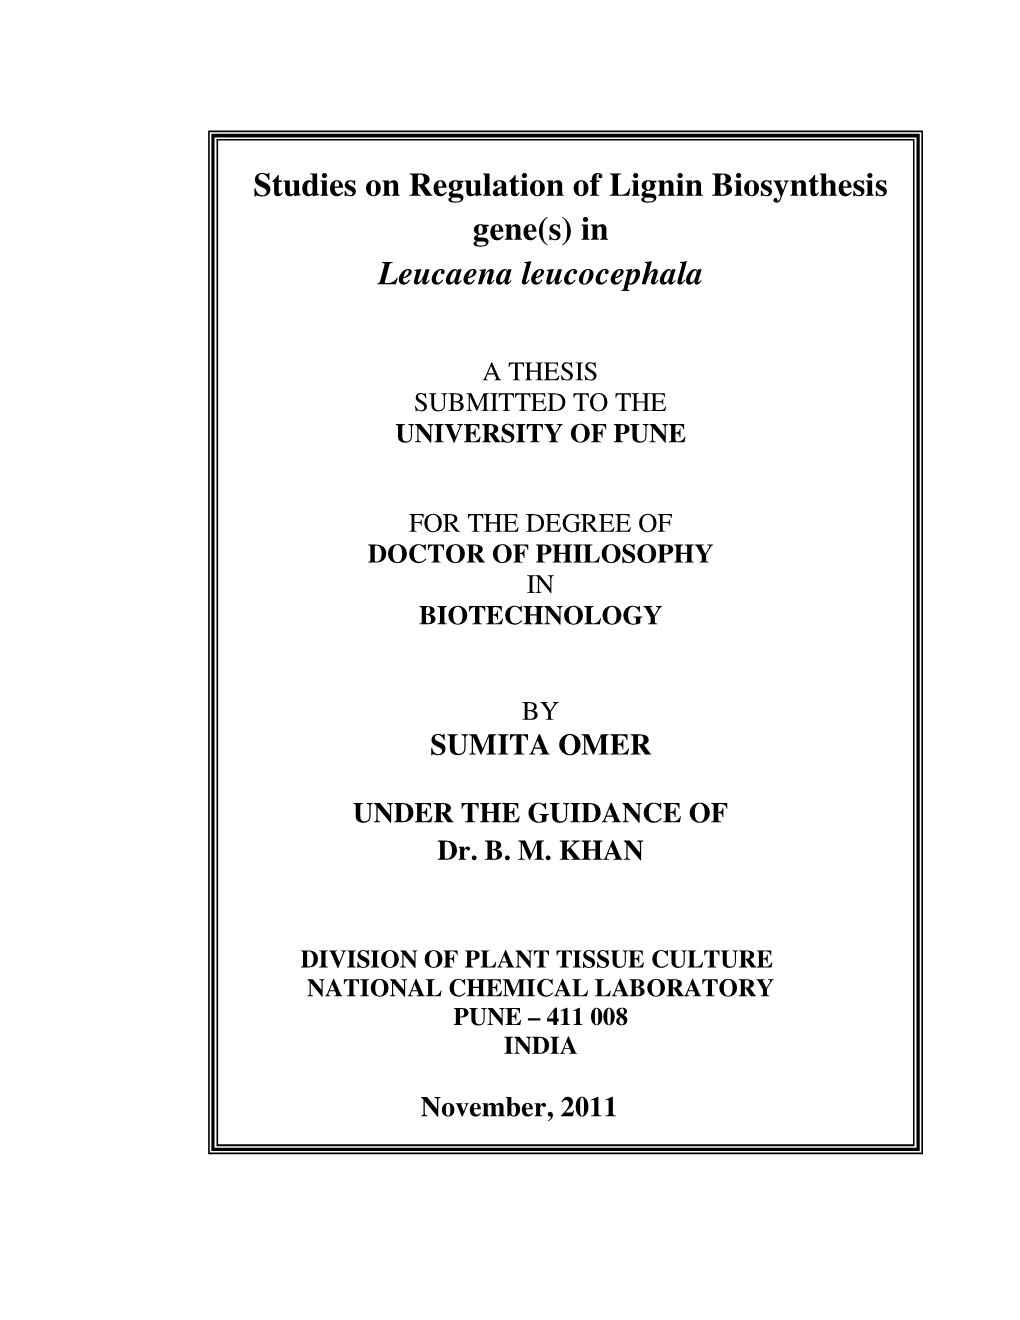 Studies on Regulation of Lignin Biosynthesis Gene(S) in Leucaena Leucocephala